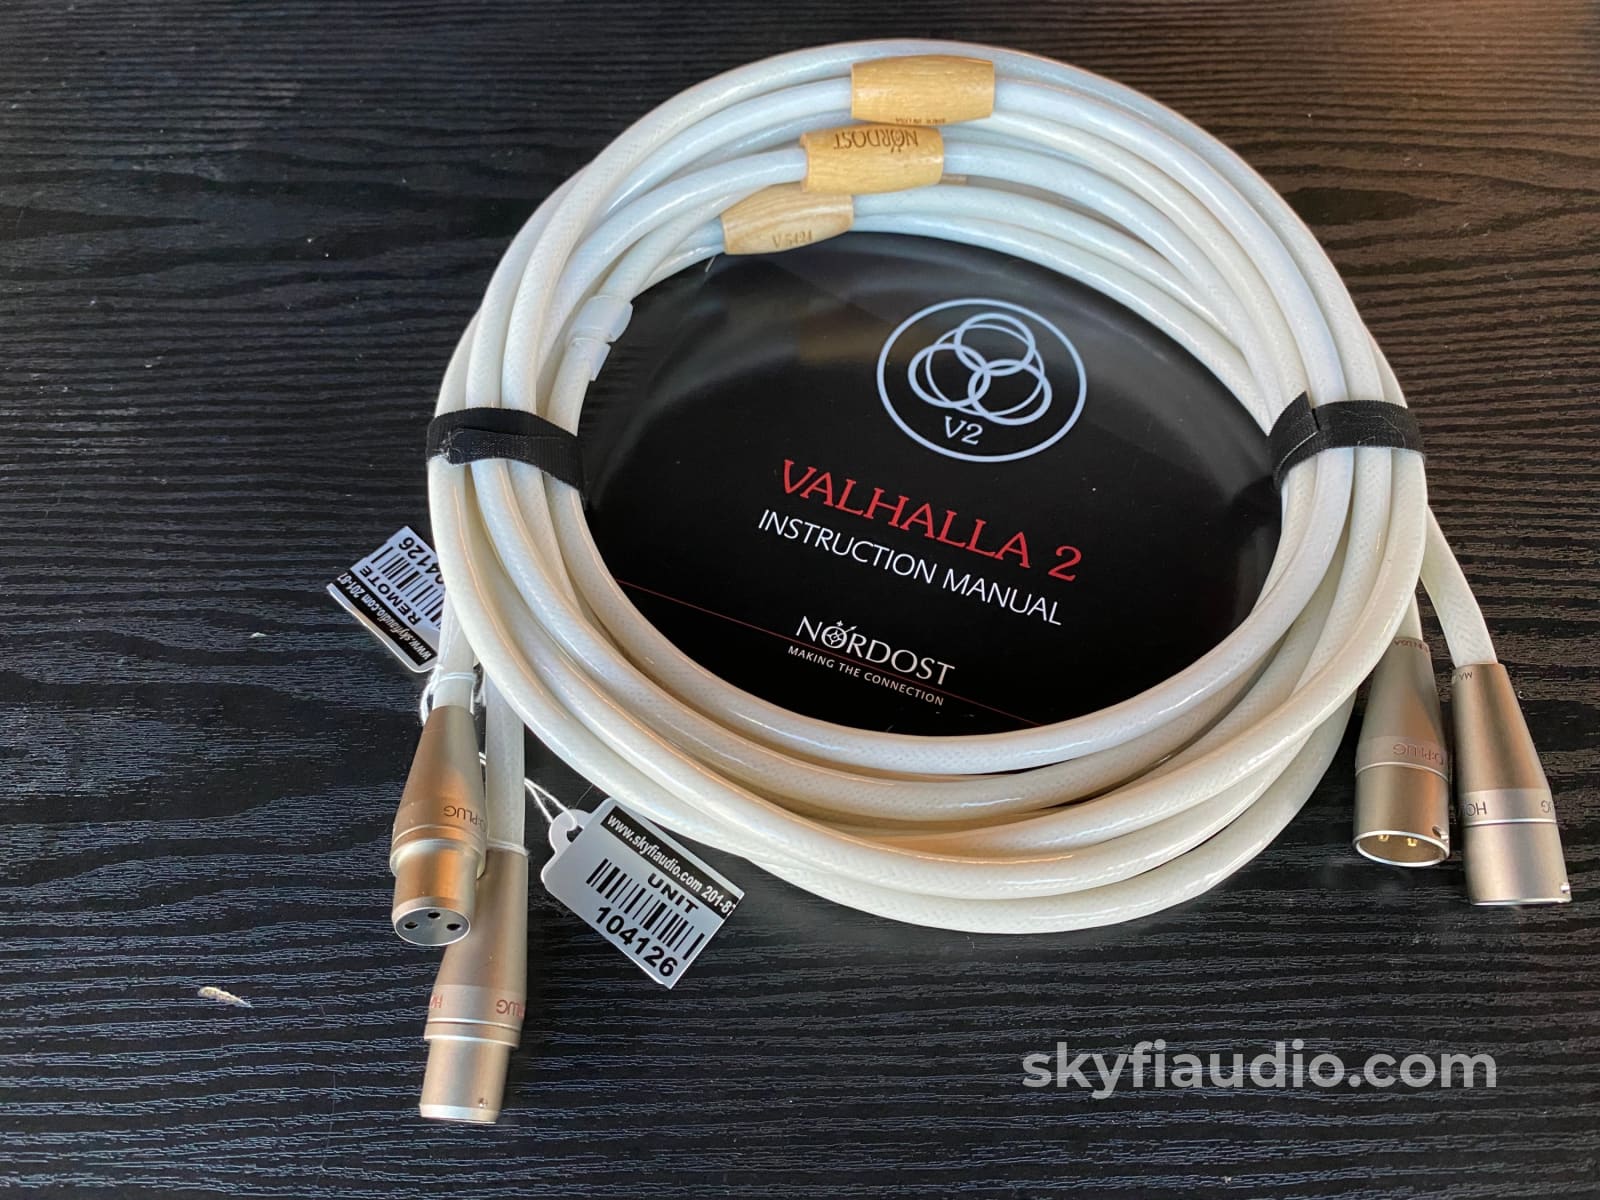 Nordost Valhalla 2 Xlr Audio Interconnects (Pair) - 2M Cables